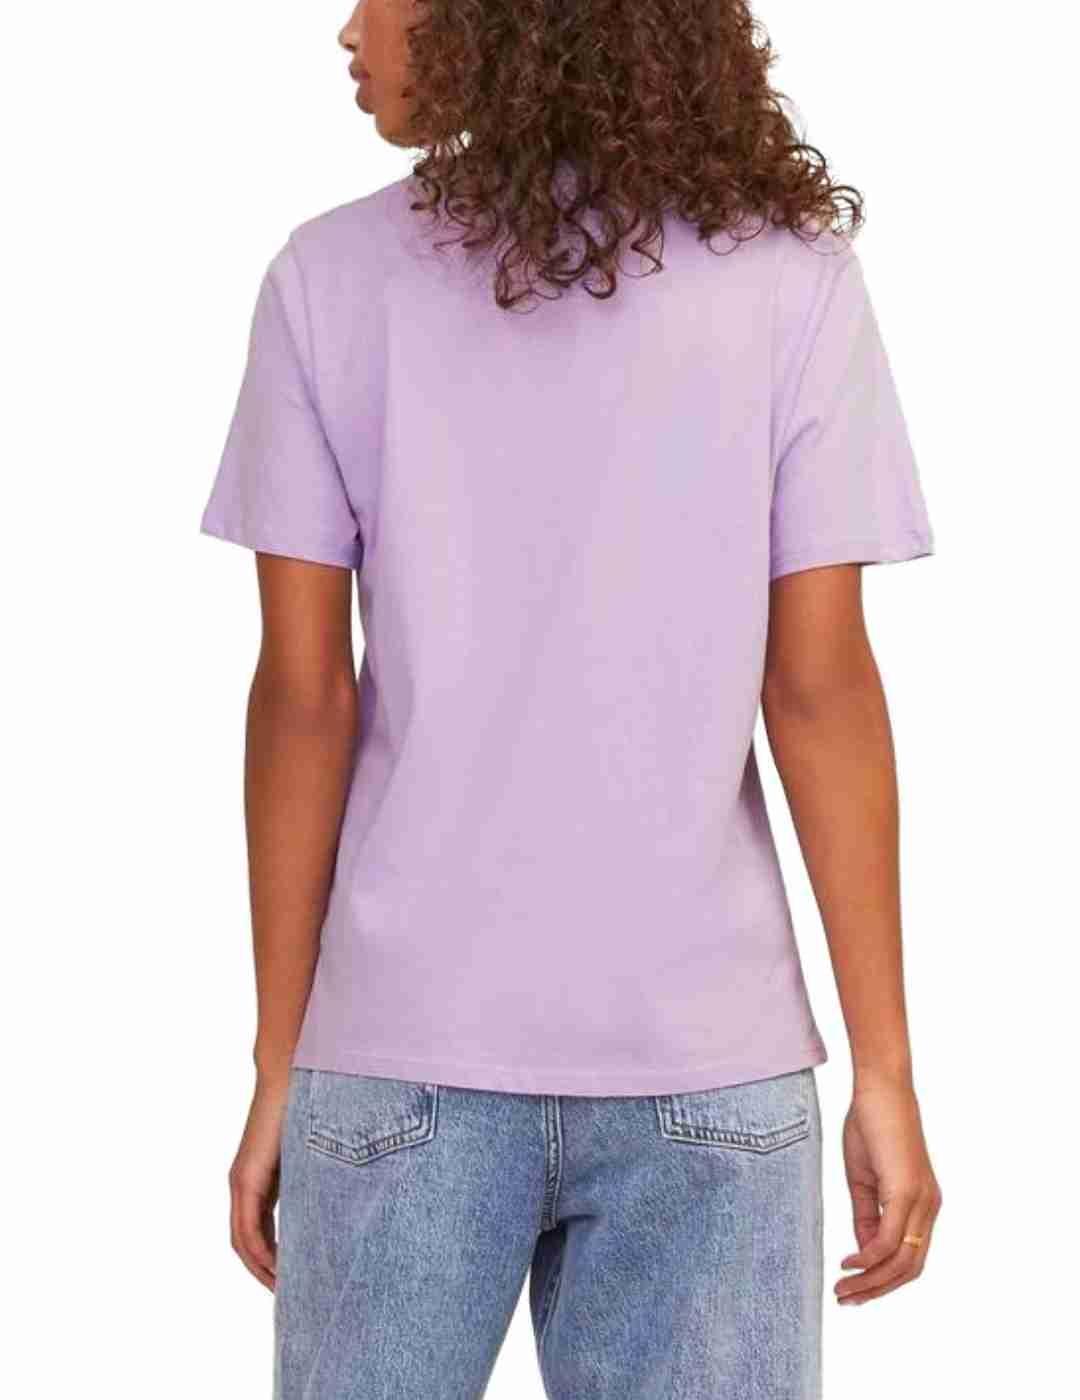 Camiseta JJXX Titia lila manga corta para mujer